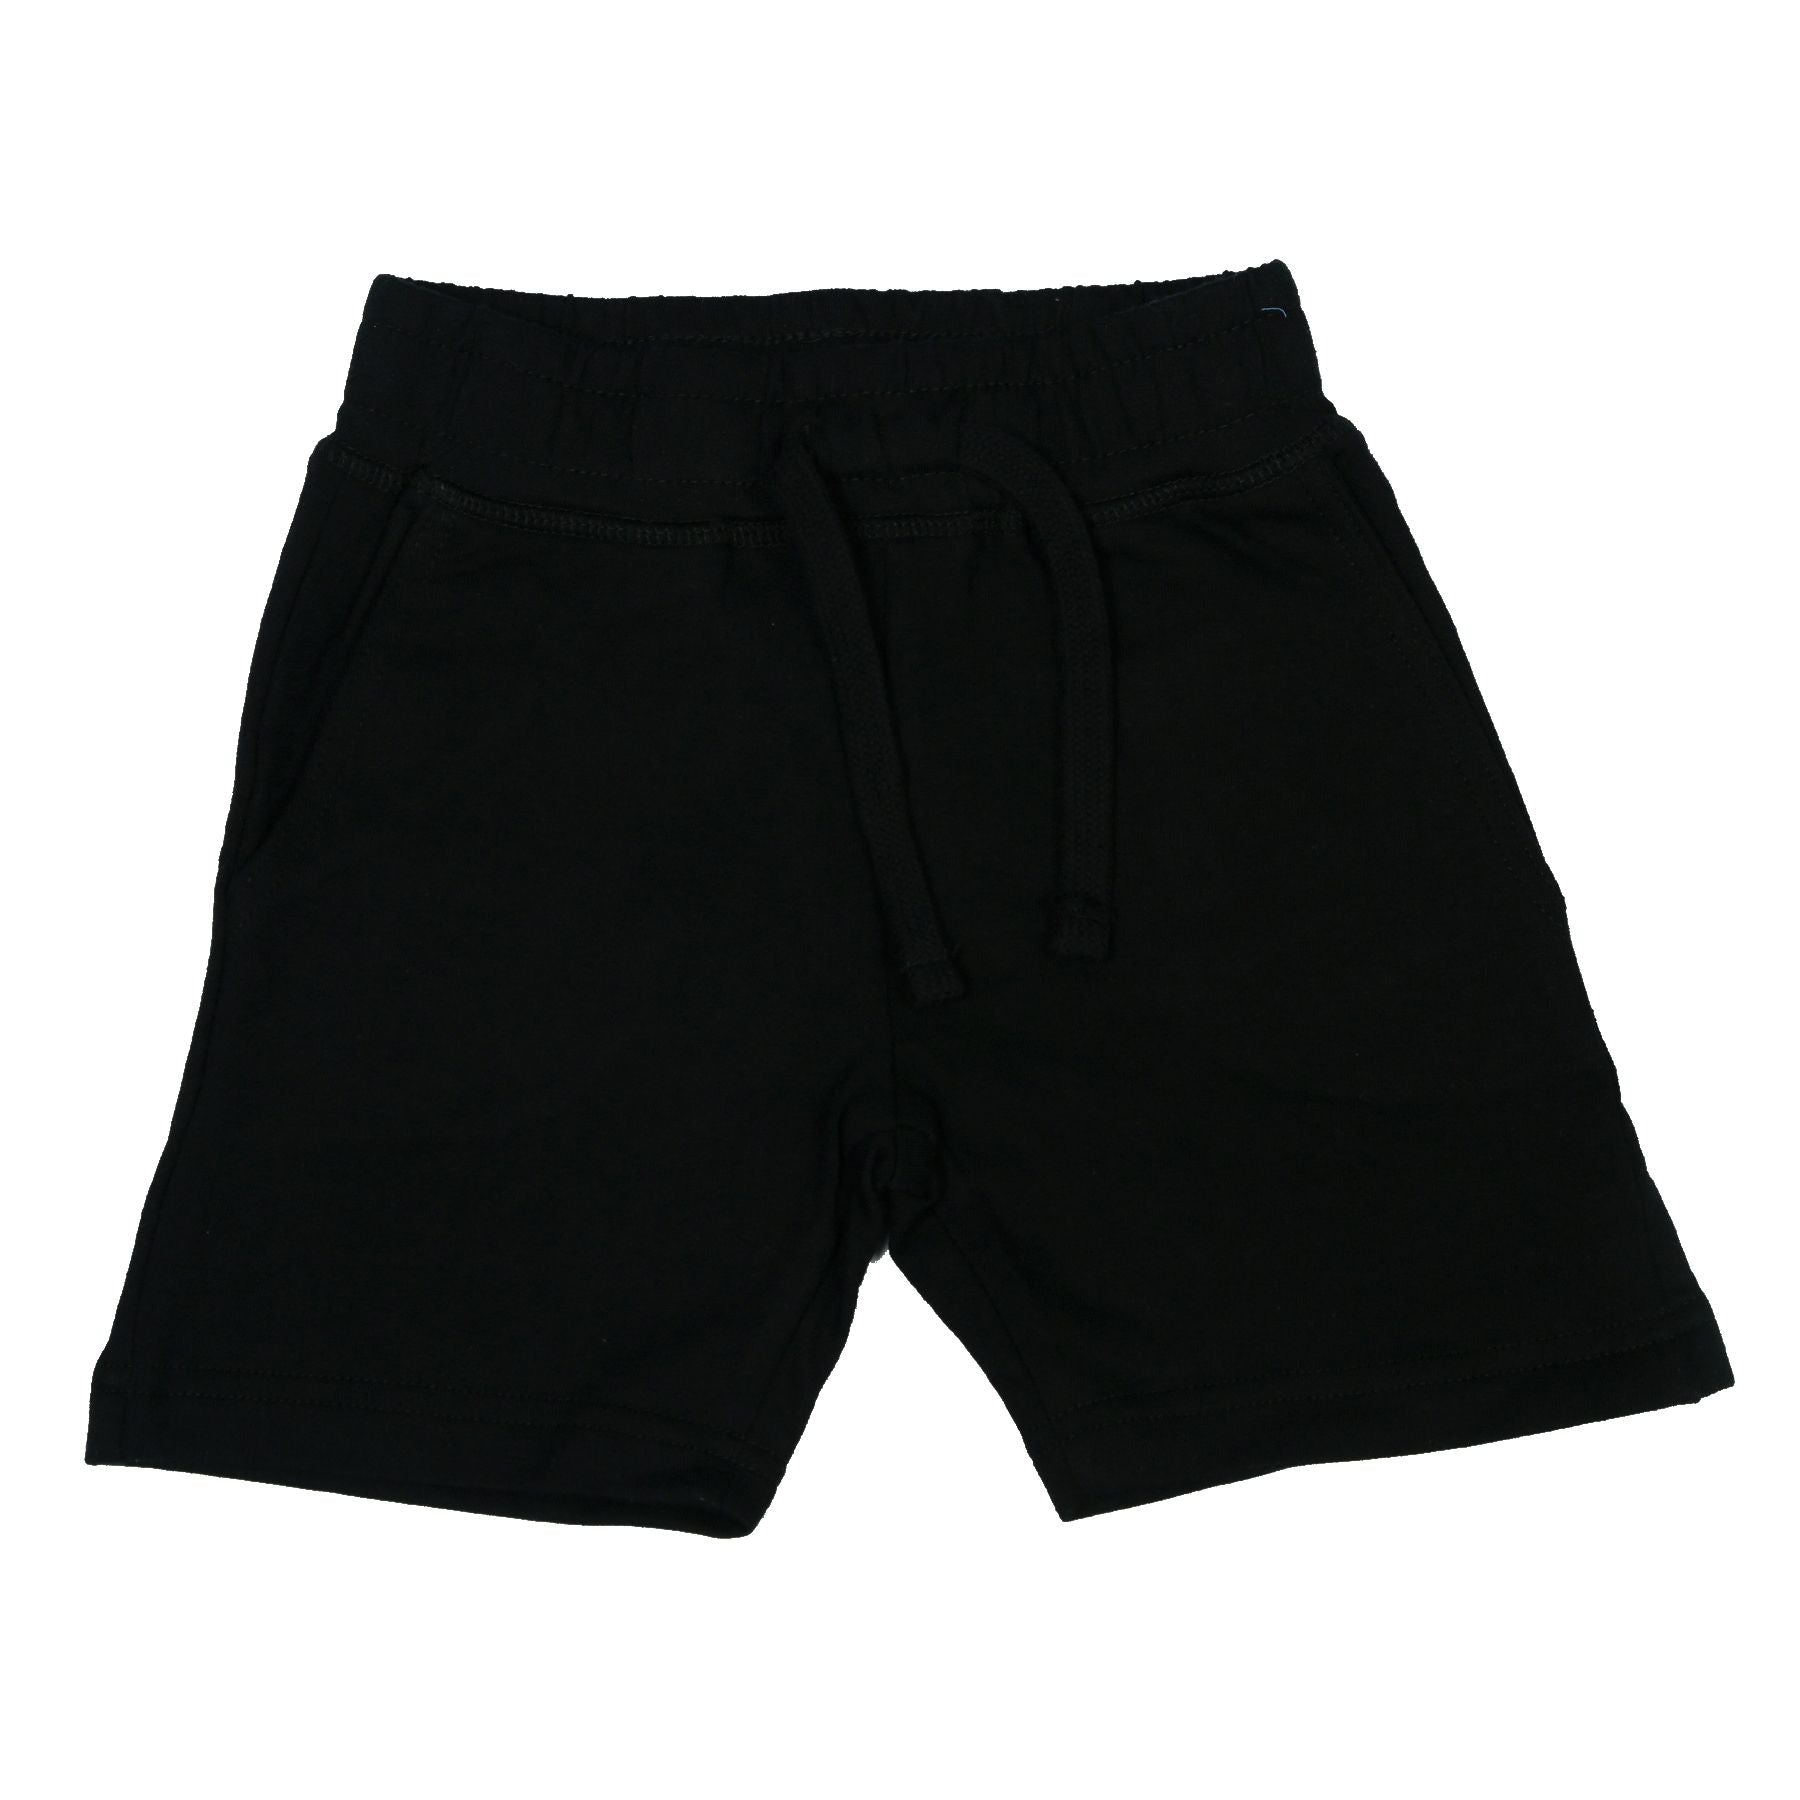 Black Comfy Shorts - Twinkle Twinkle Little One